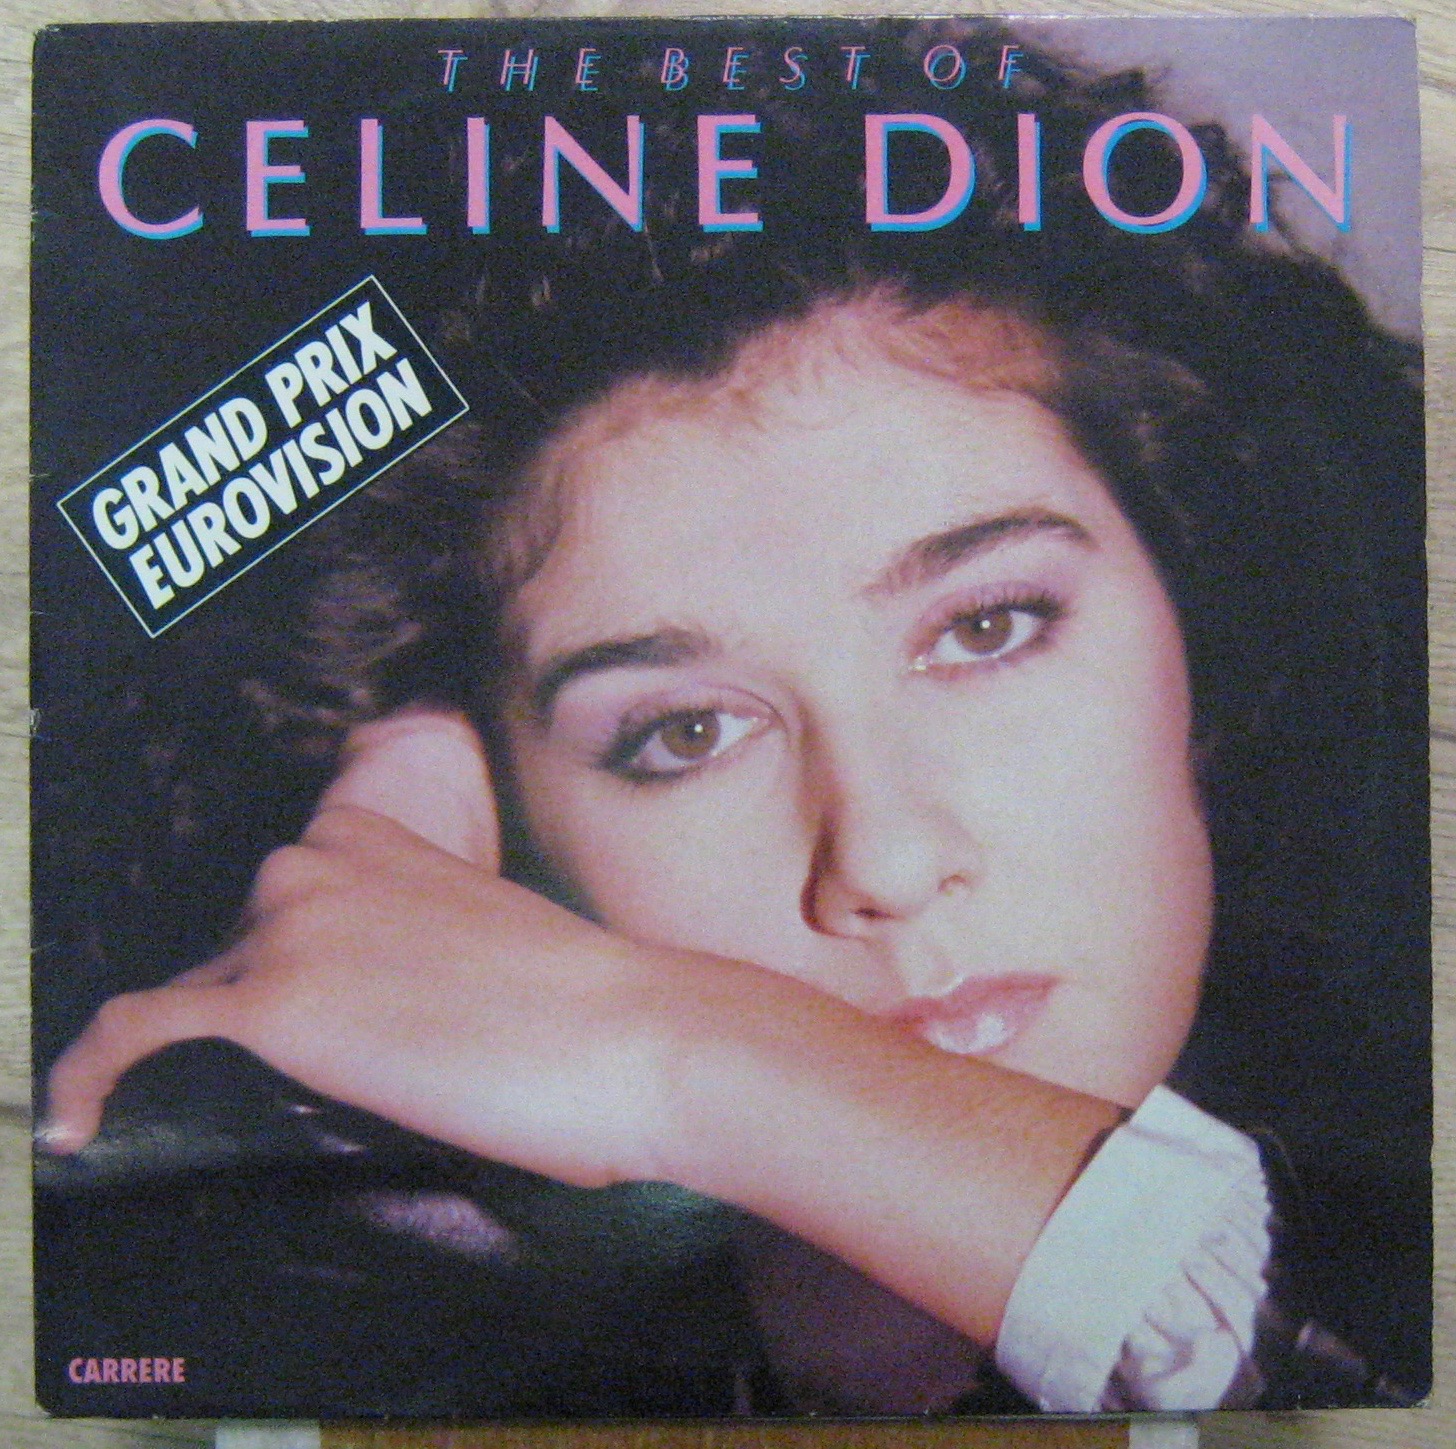 Celine Dion The best of (Vinyl Records, LP, CD) on CDandLP